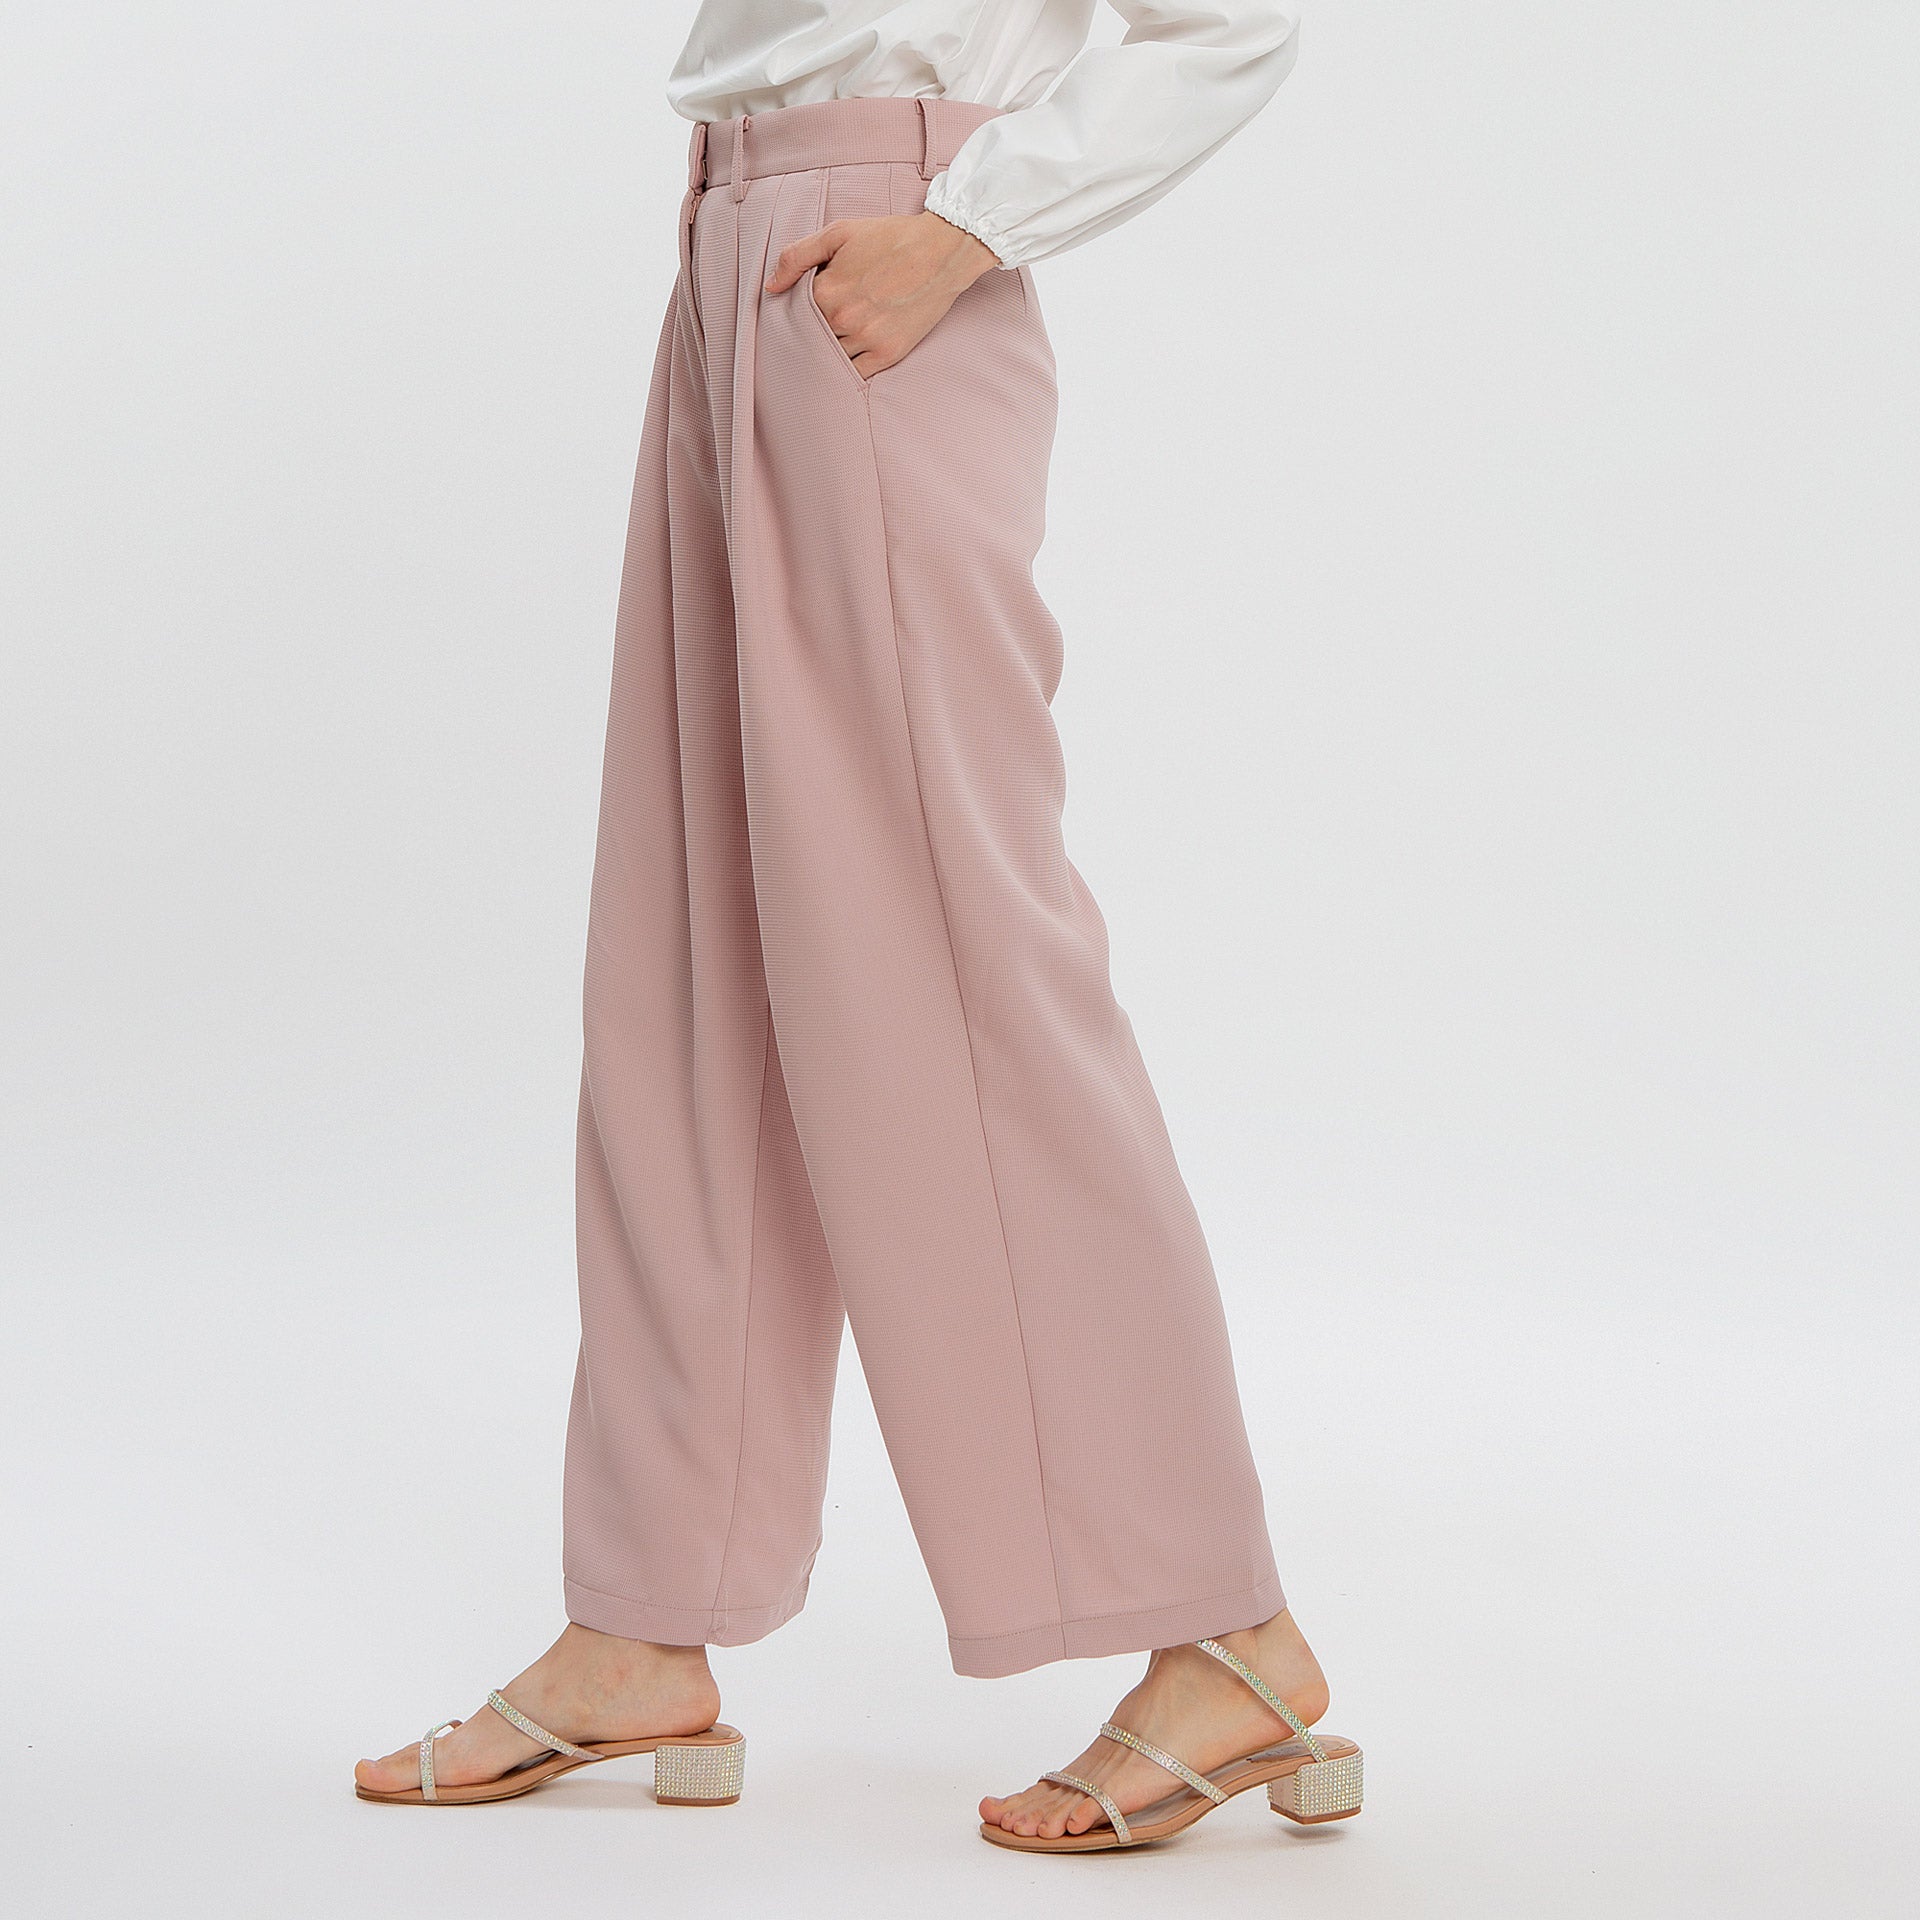 Ishana Pink Pants | HijabChic